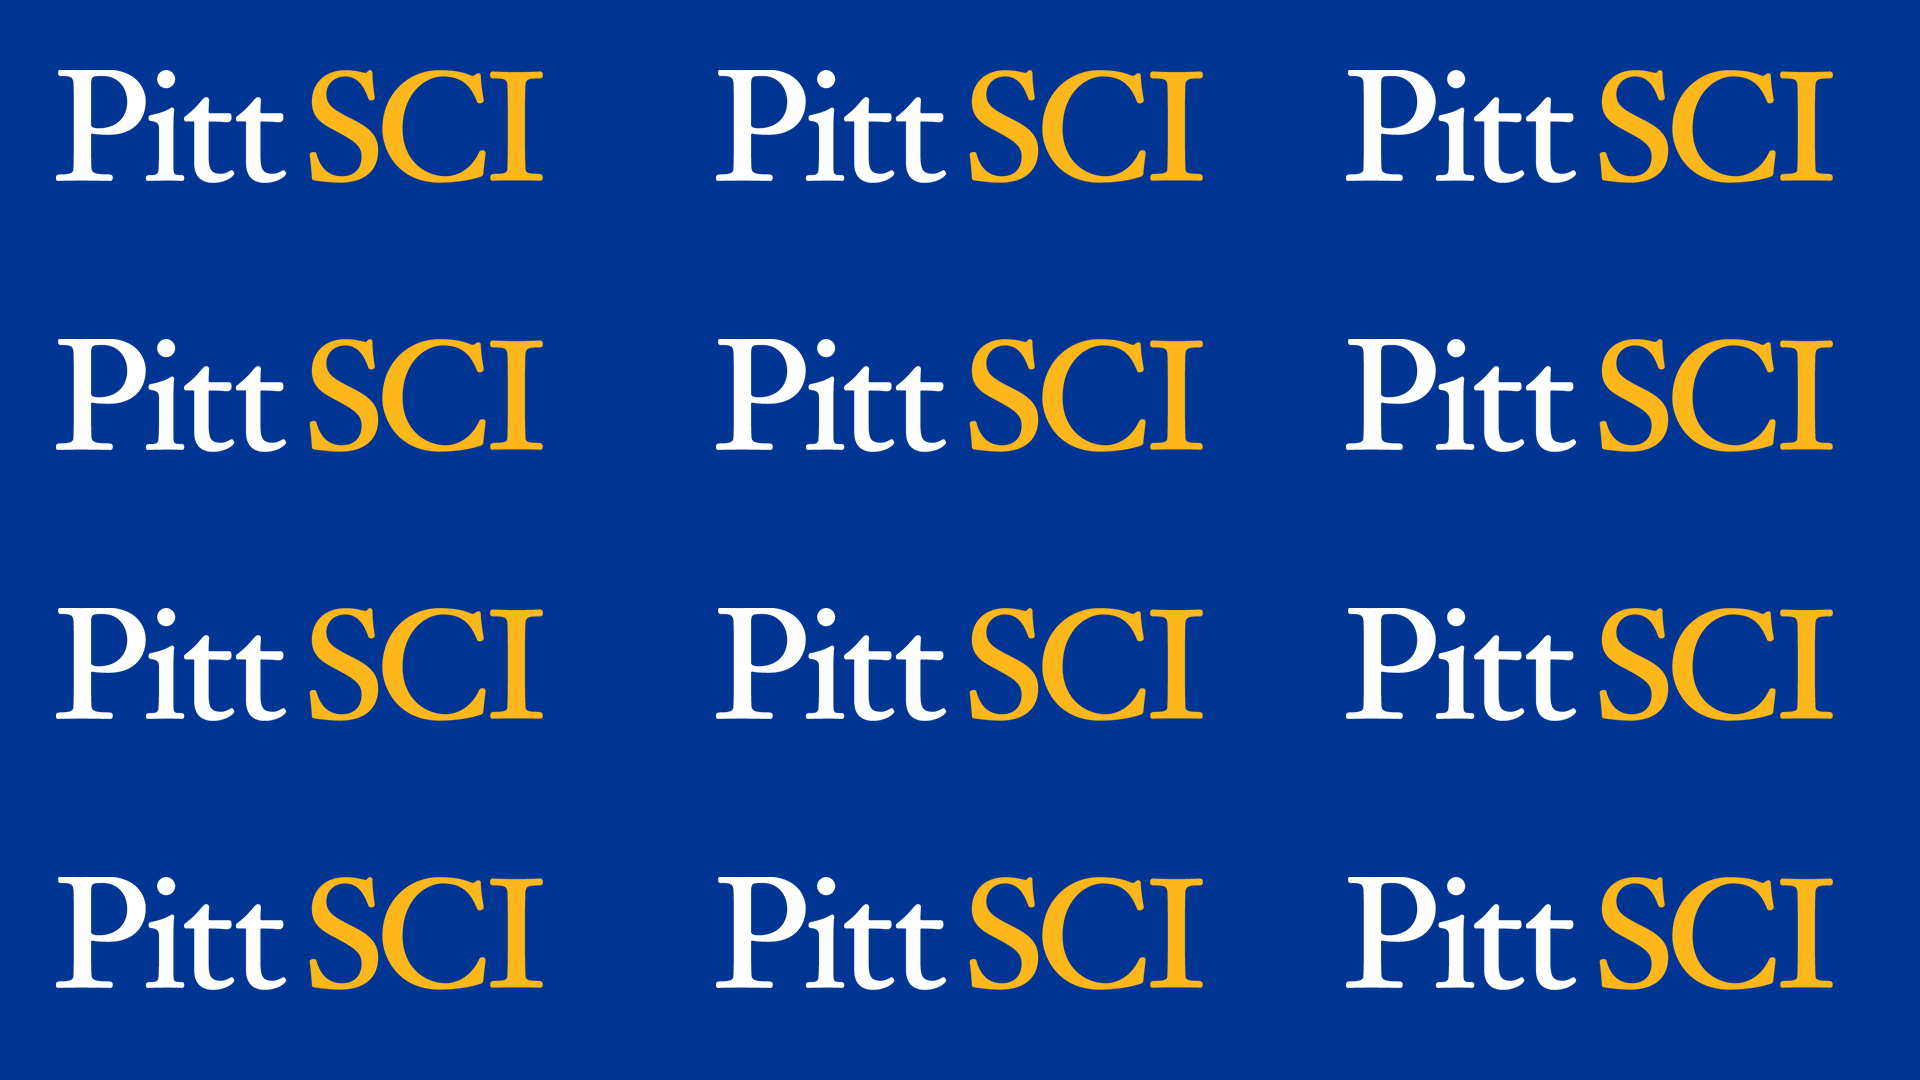 PittSCI logo on repeat